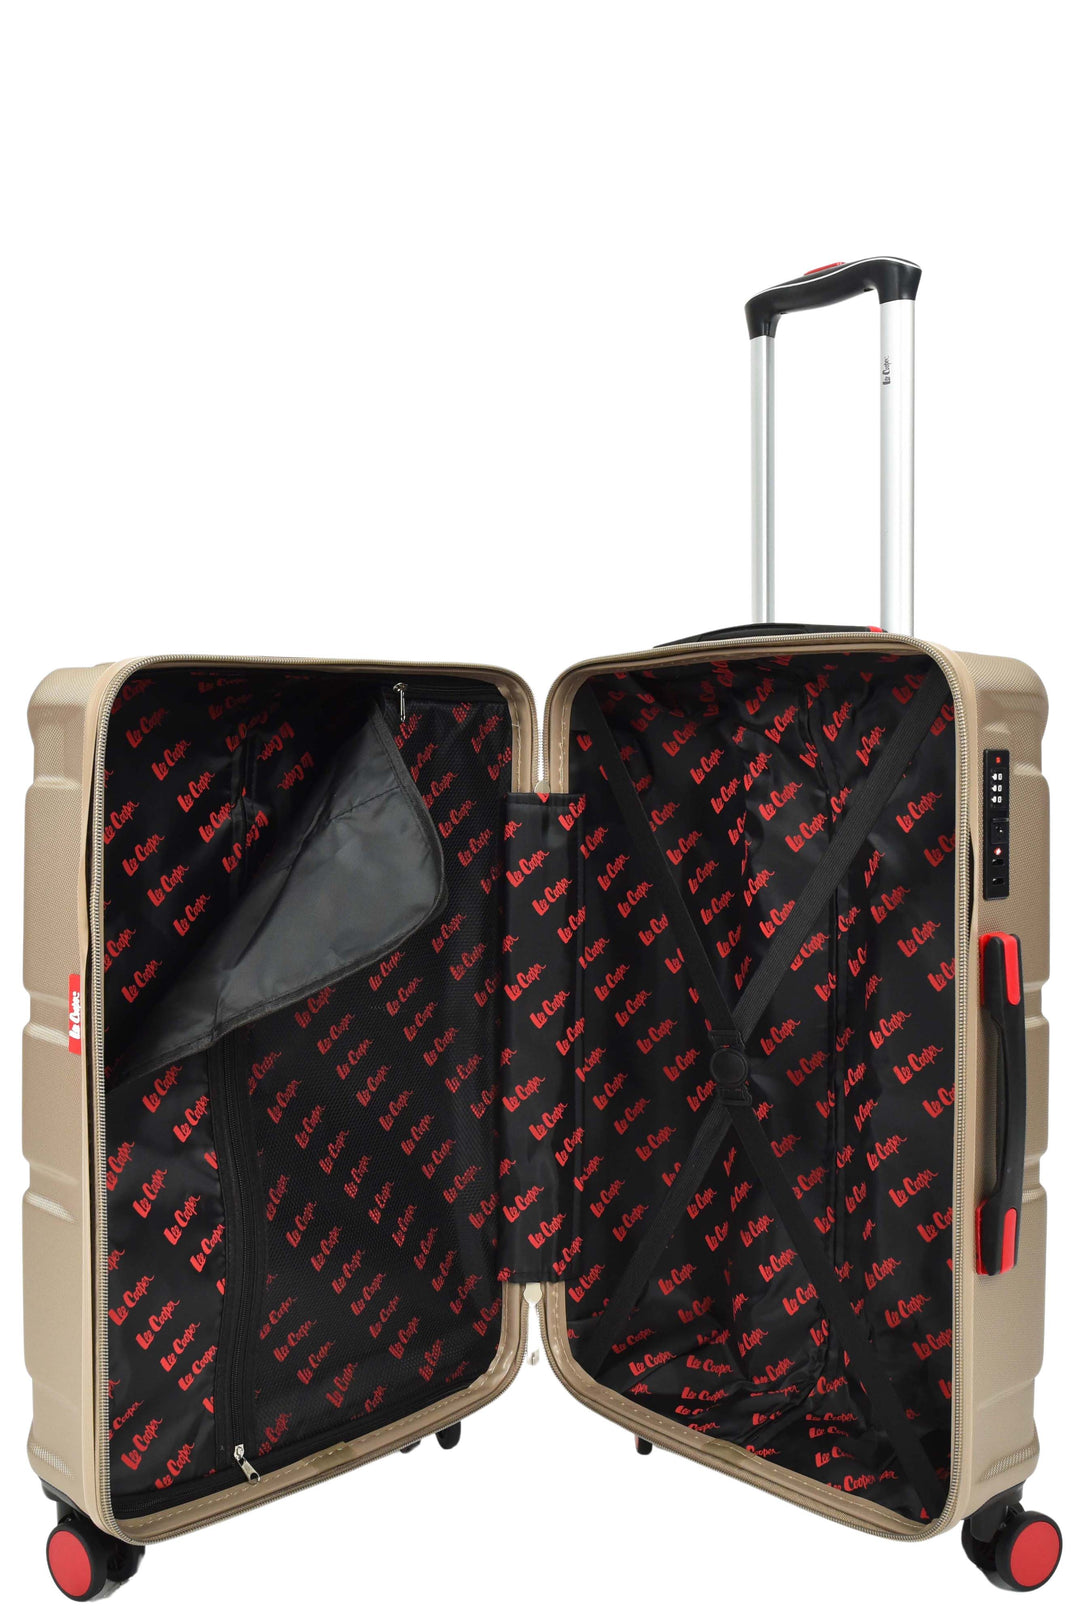 Lee Cooper Union Jack Suitcase 10